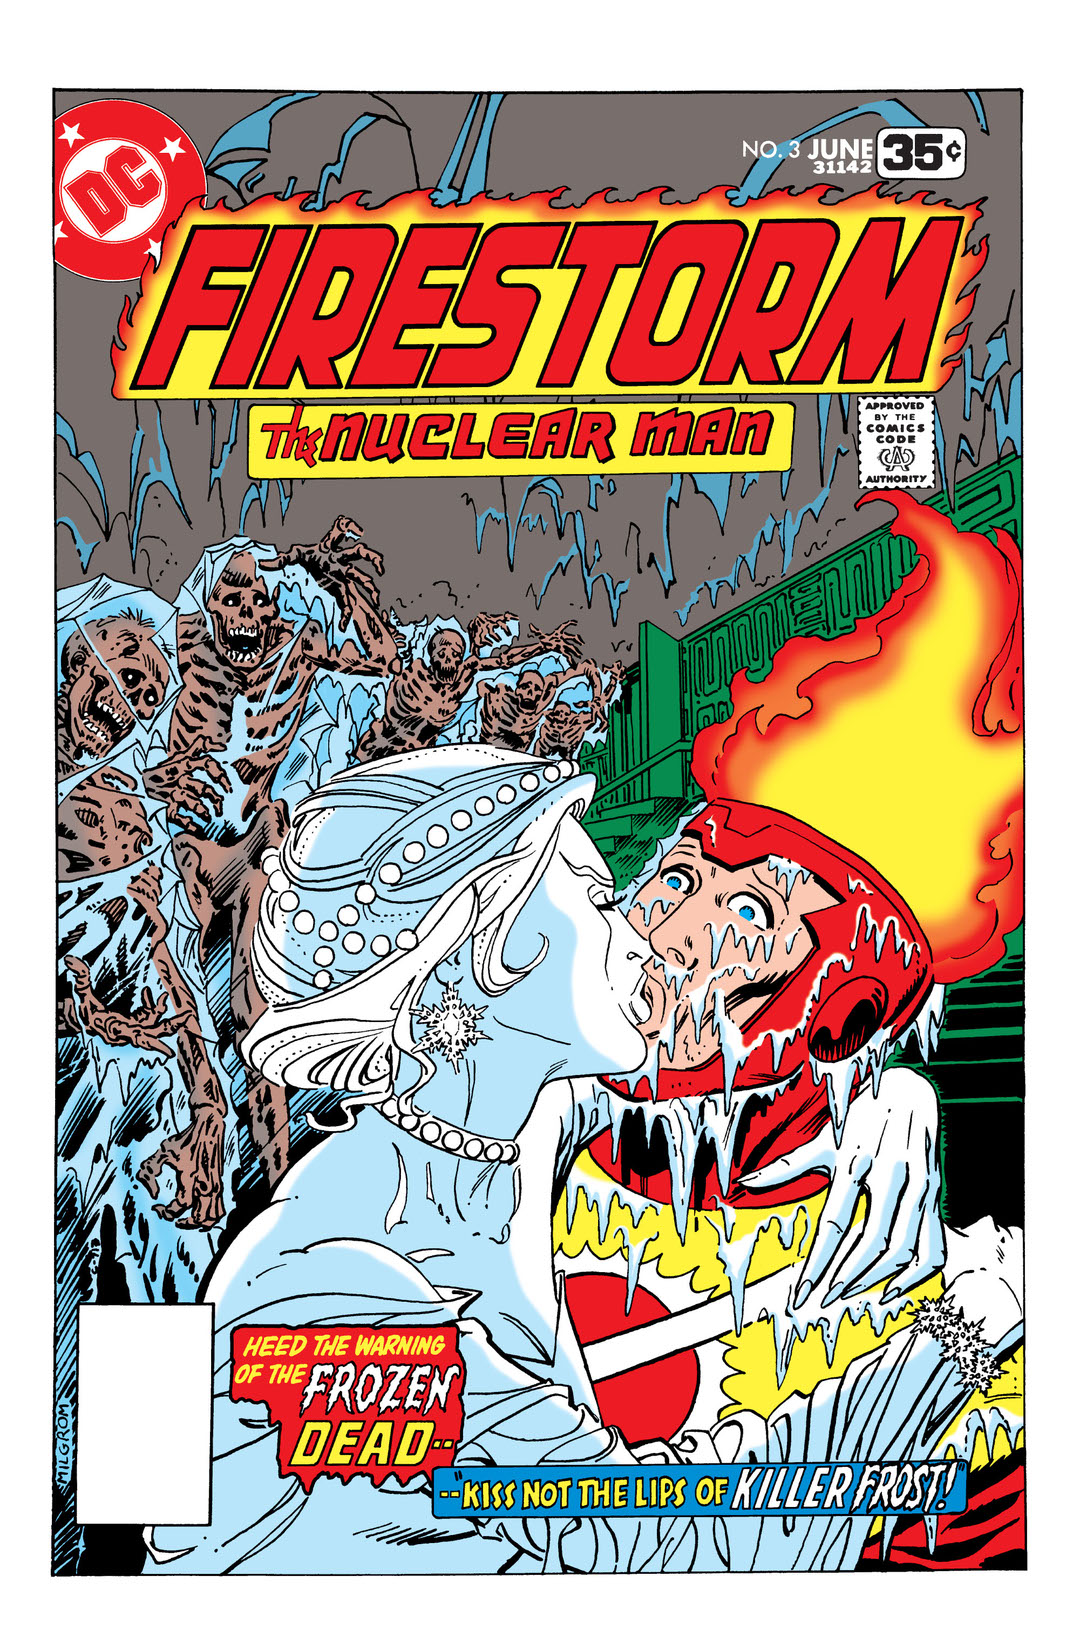 Firestorm #3 preview images